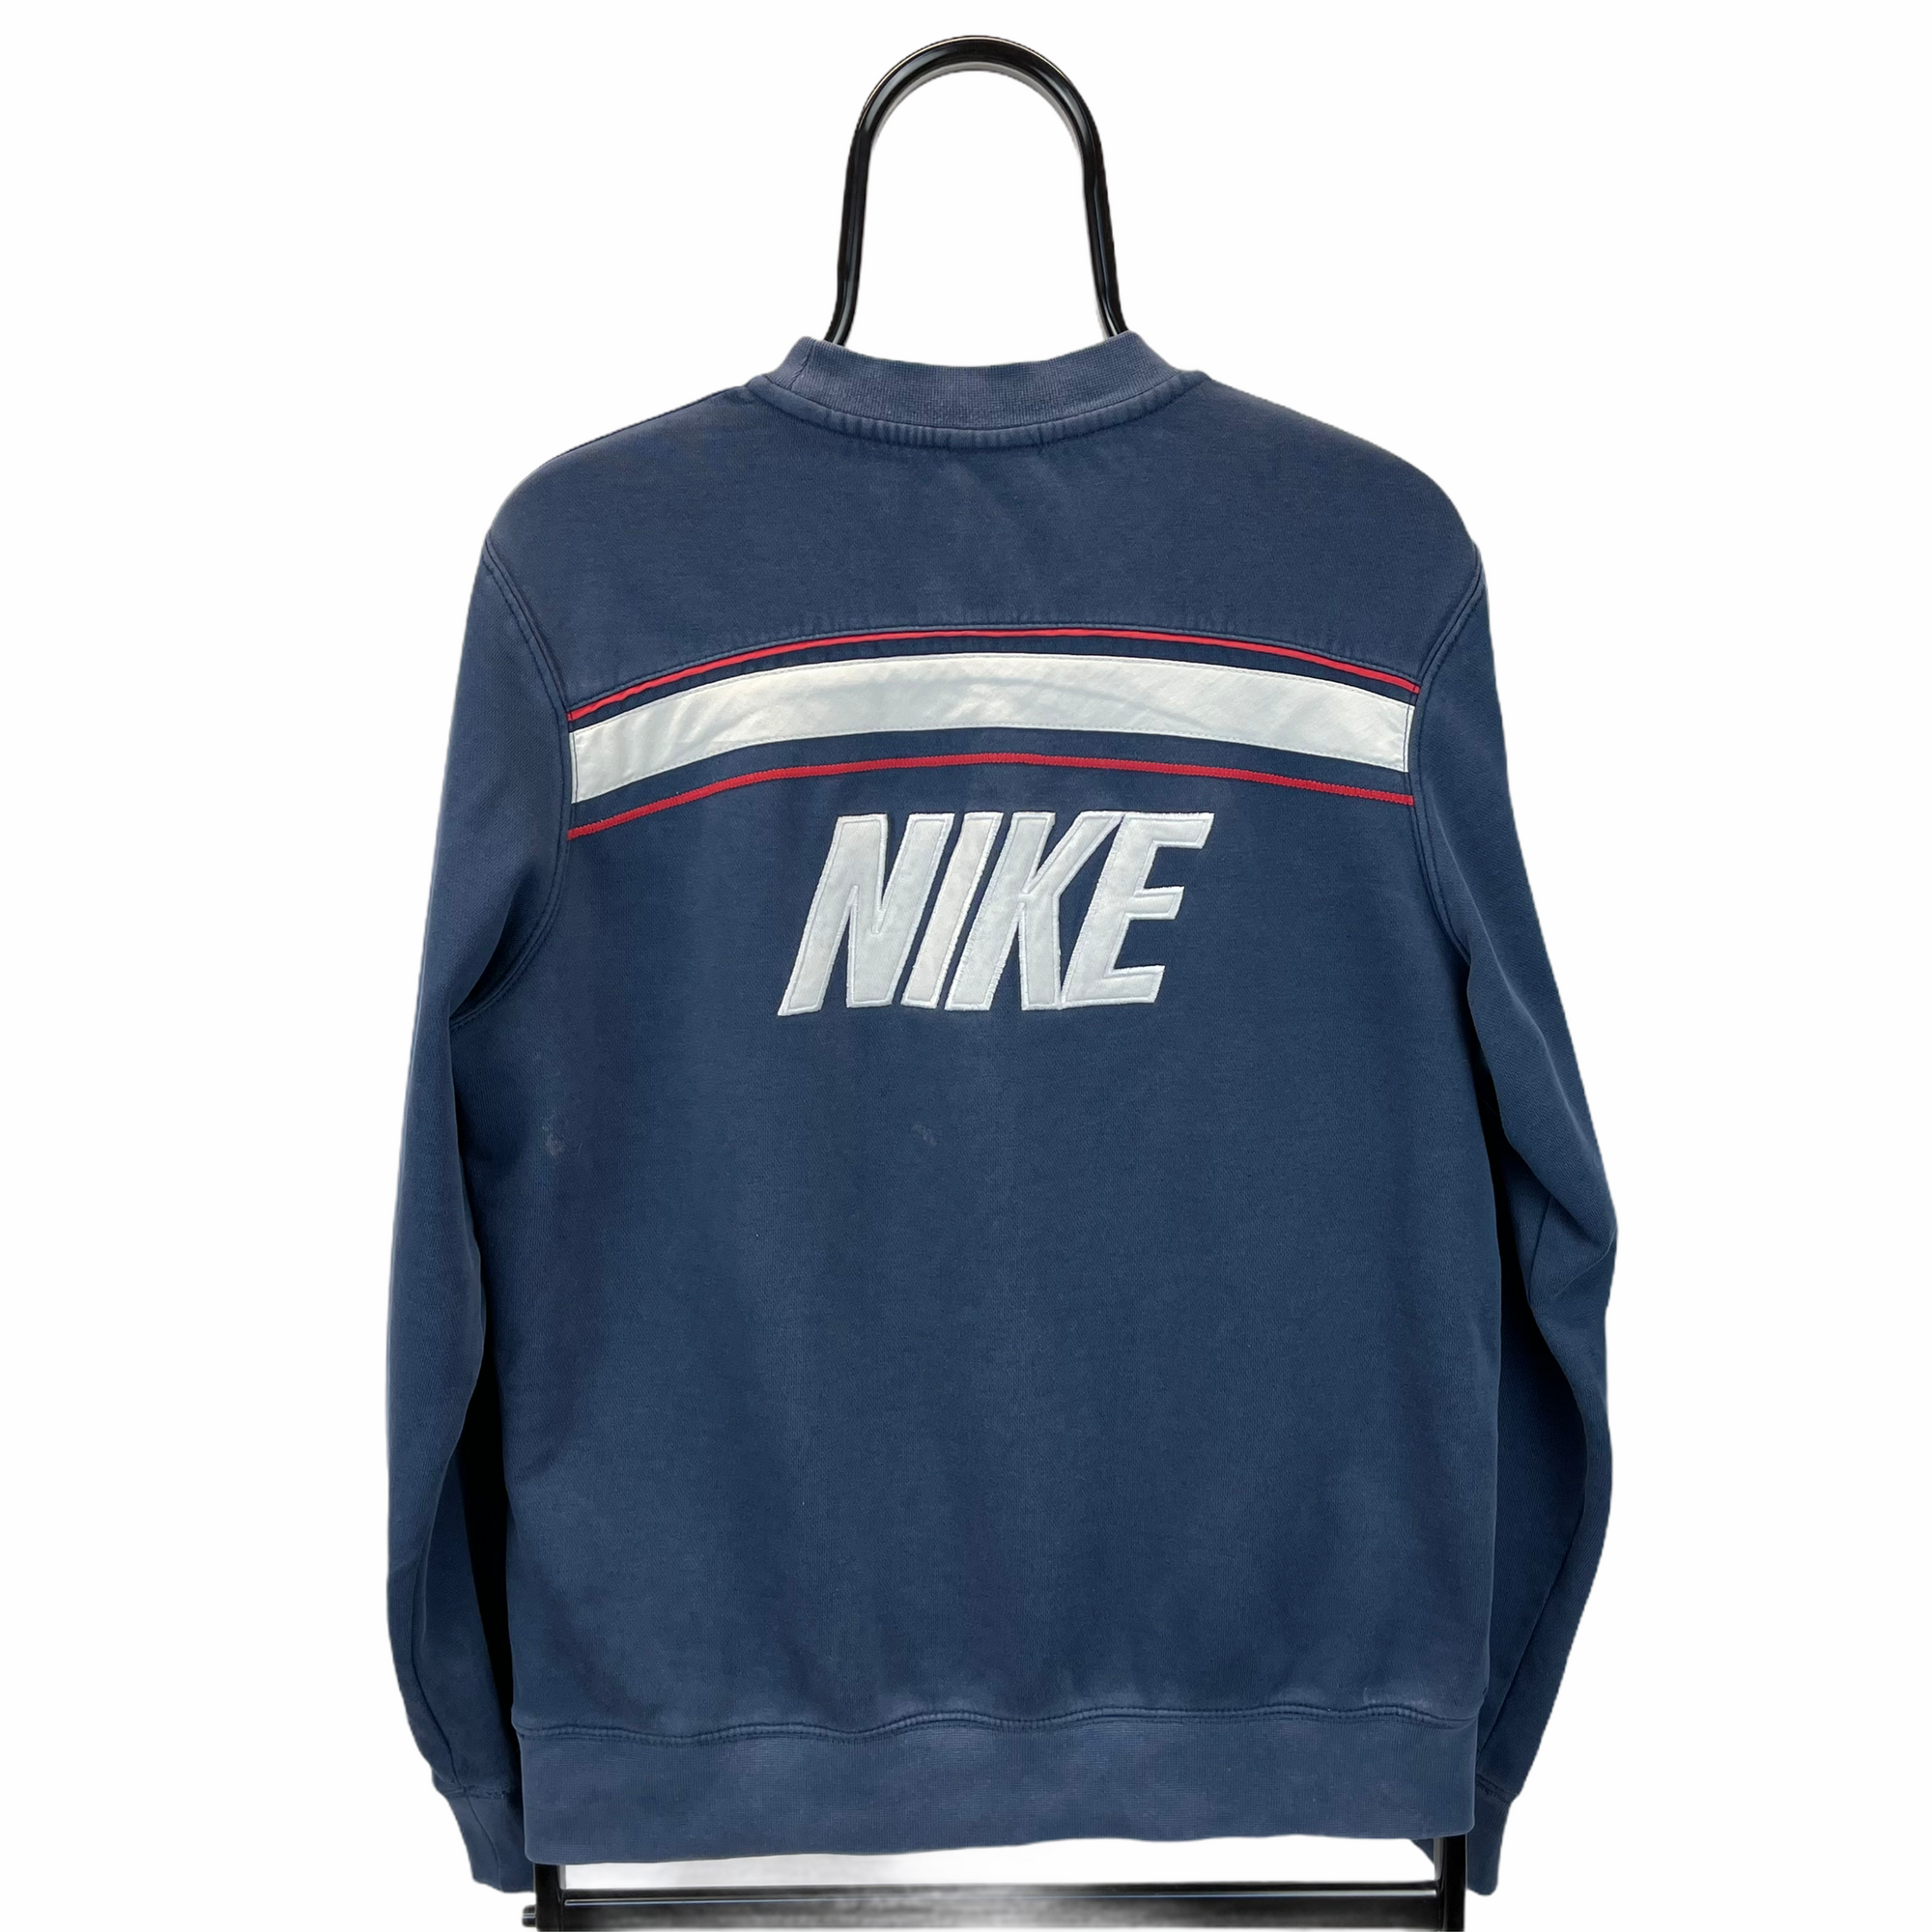 Vintage Nike Back Spellout Sweatshirt in Navy, Red & White - Men's Small/Women's Medium